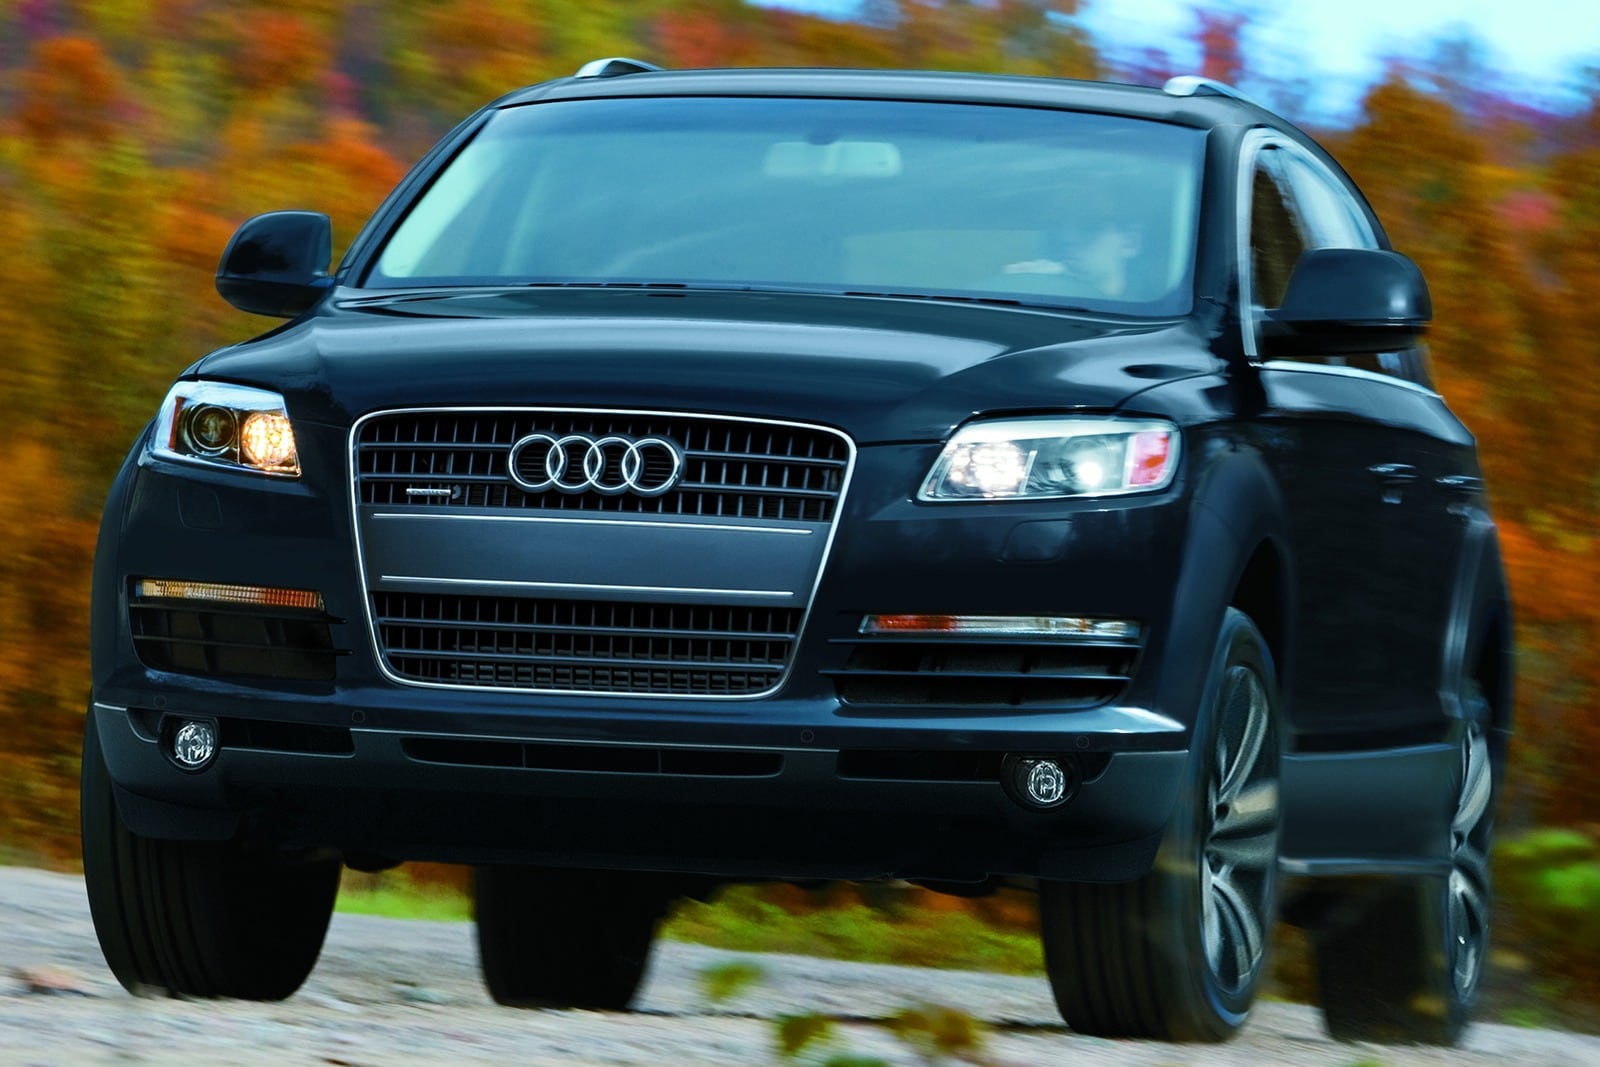 2010 Audi Q7 Review & Ratings | Edmunds